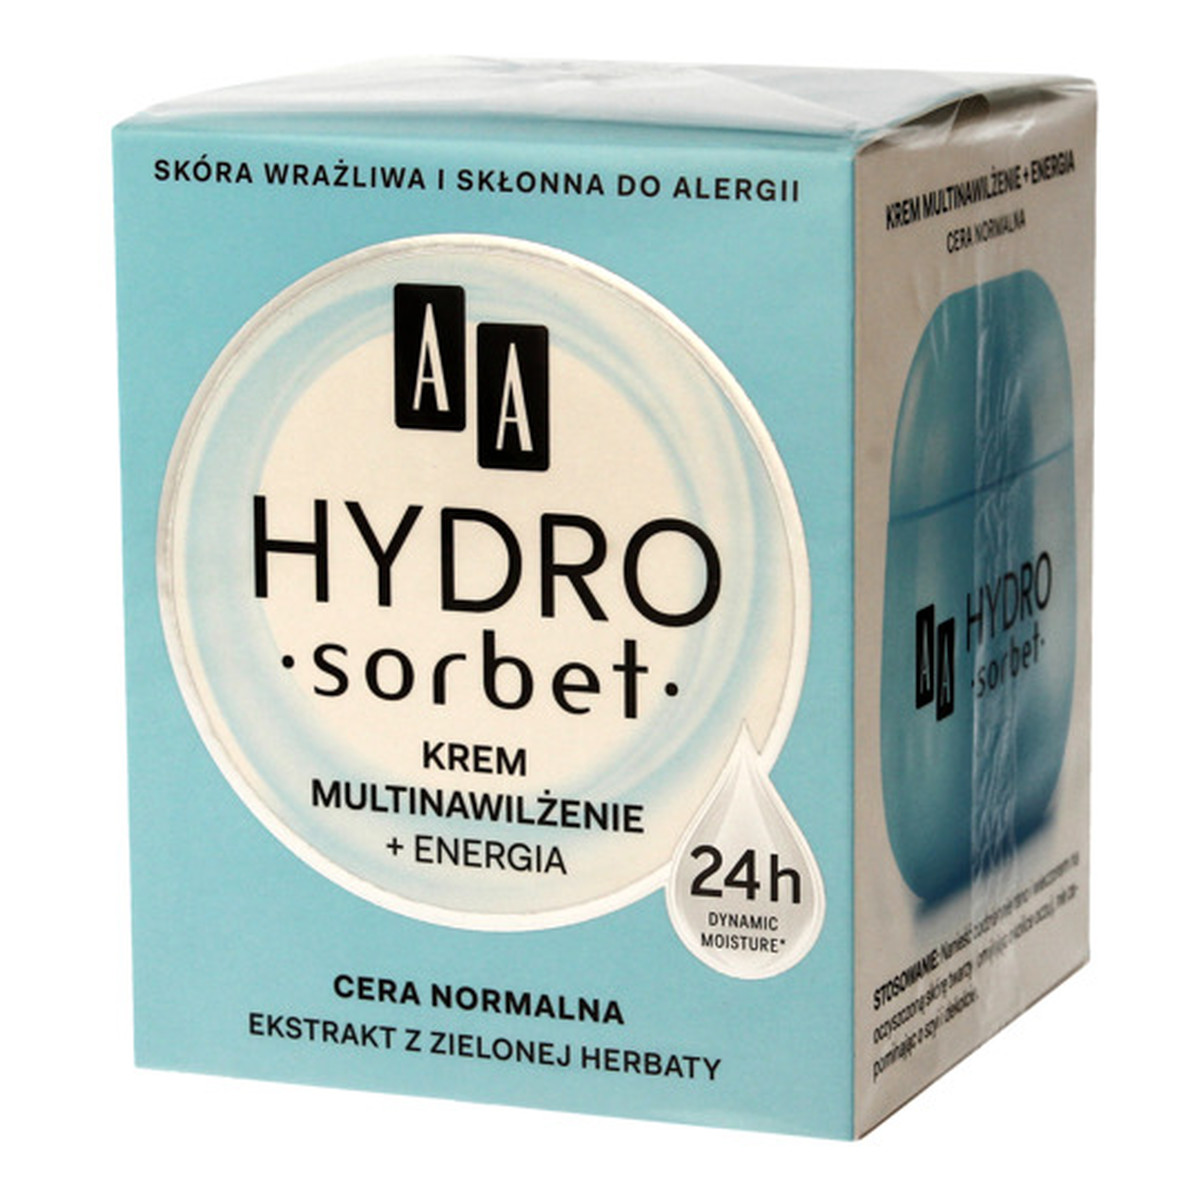 AA Hydro Sorbet Krem multinawiżenie + energia - cera normalna 50ml